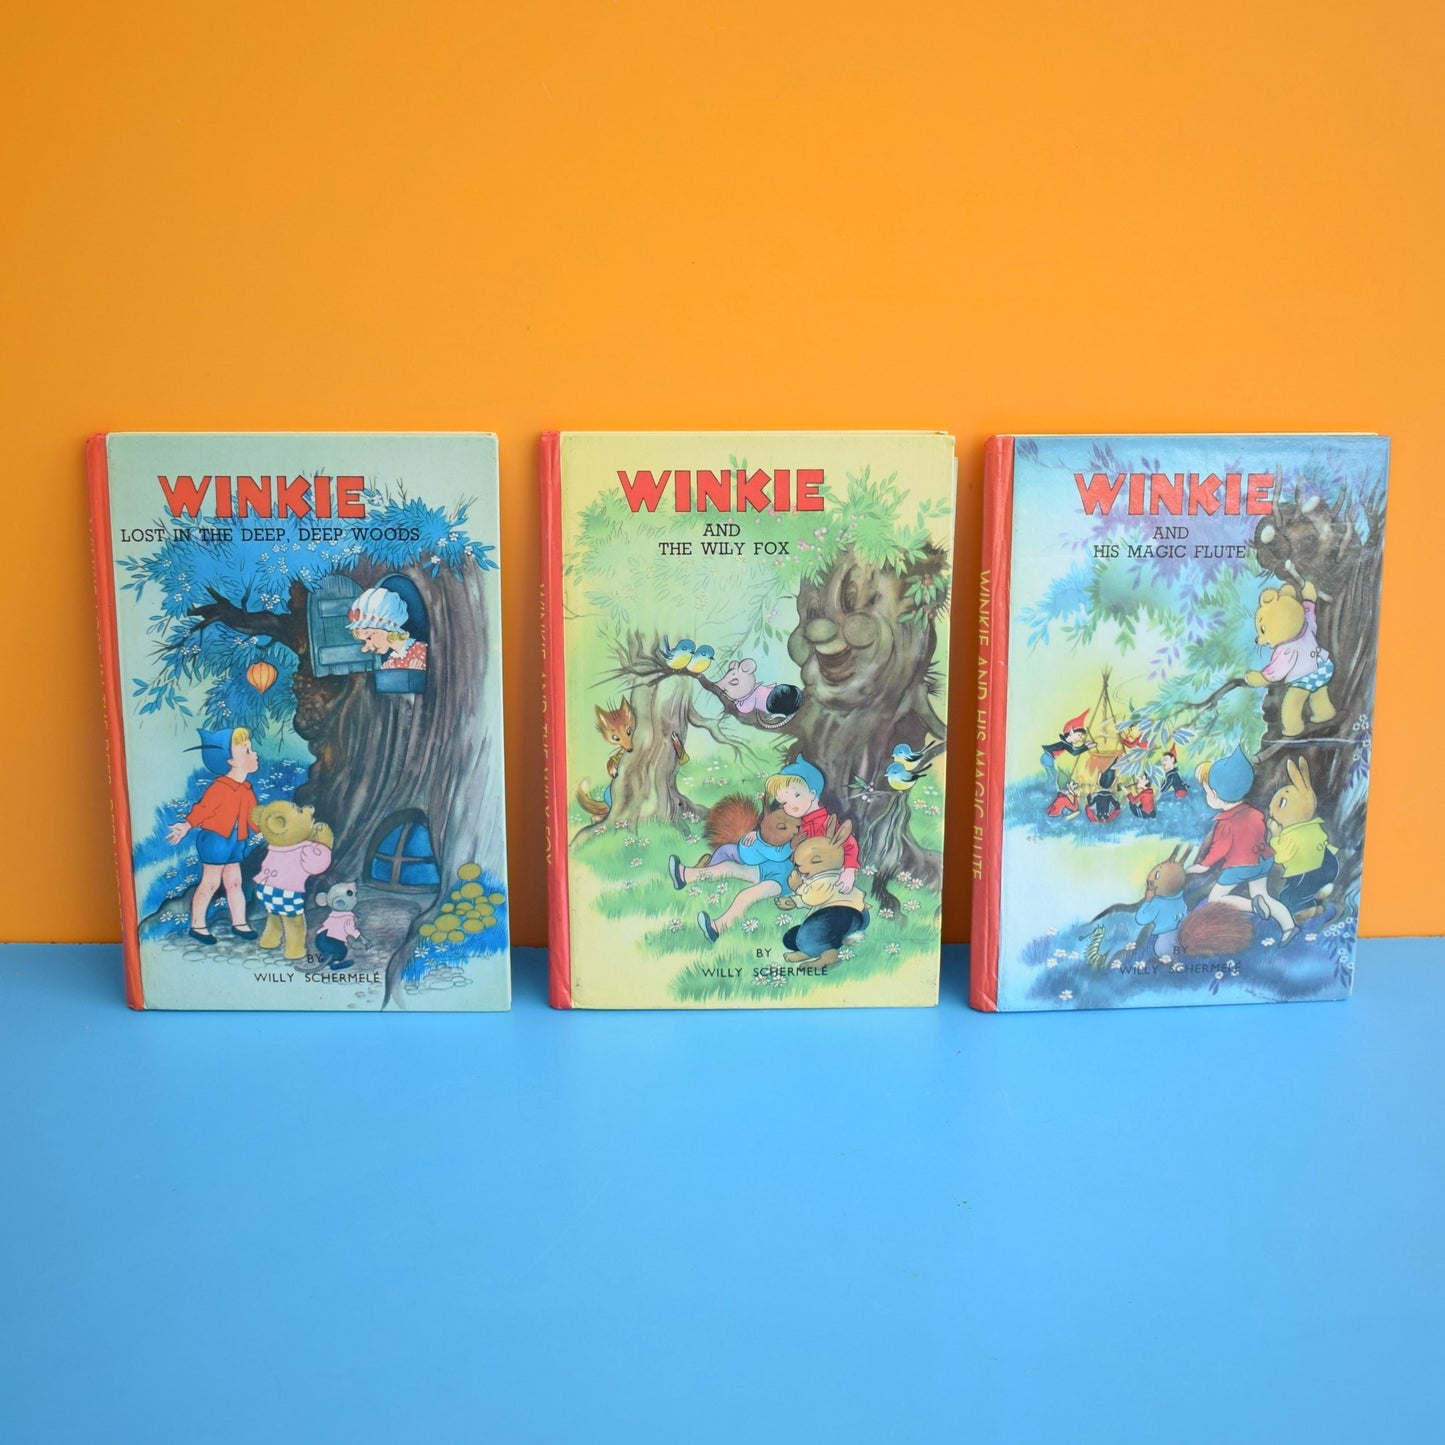 Vintage 1970s Winkie Books x3 - Willy Schermele